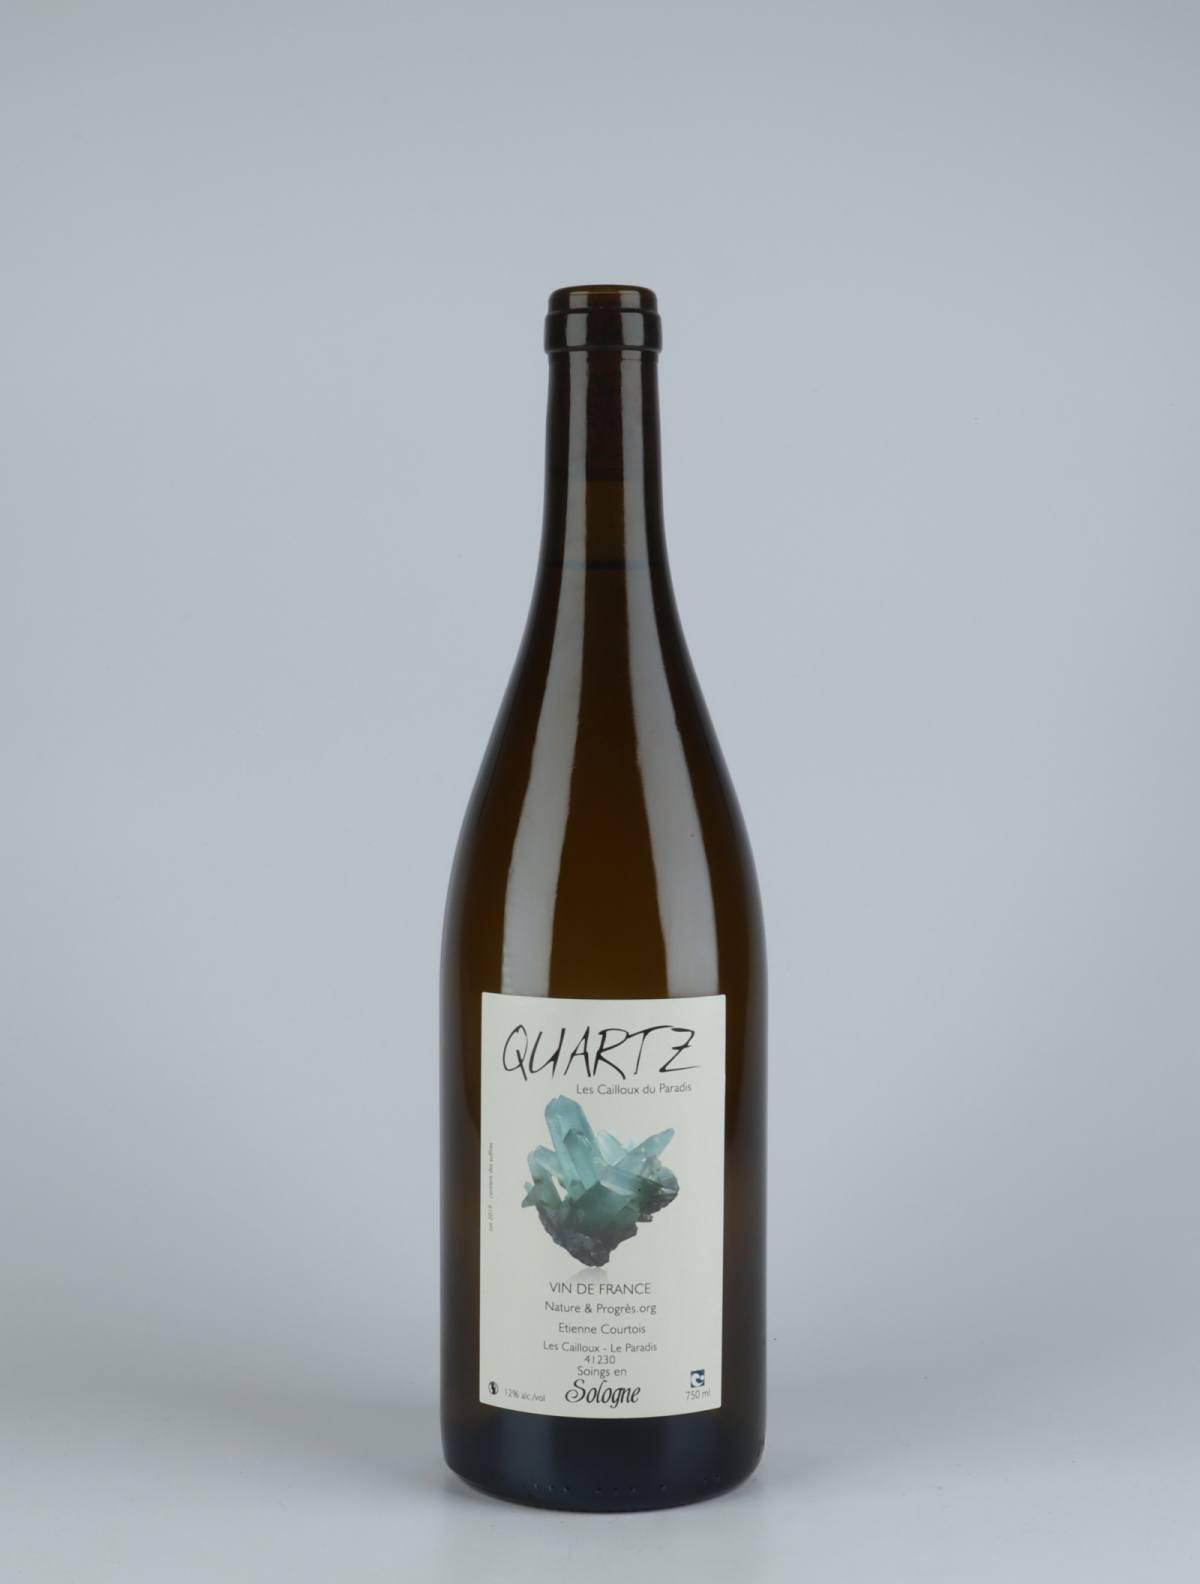 A bottle 2019 Quartz White wine from Etienne Courtois, Loire in France